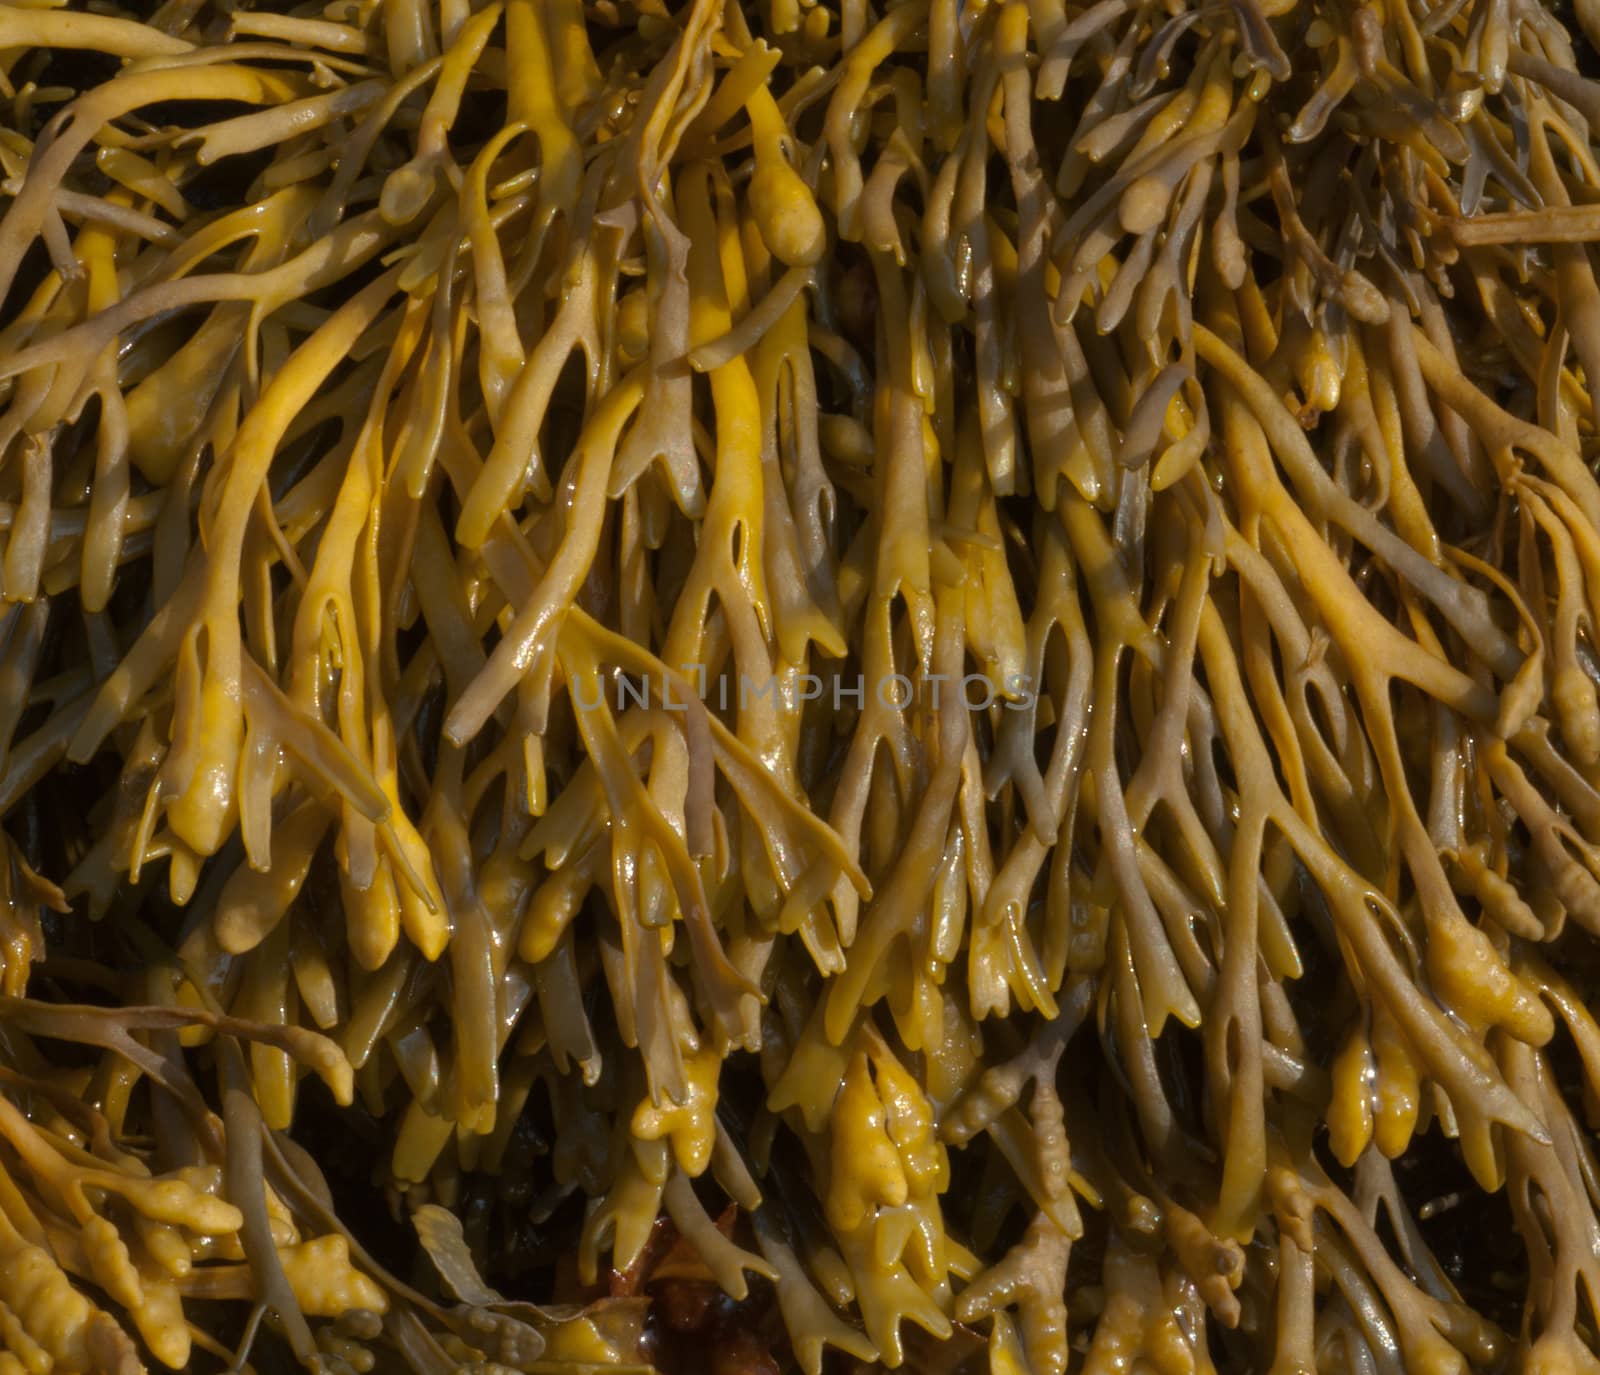 Channel Wrack Seaweed by TimAwe